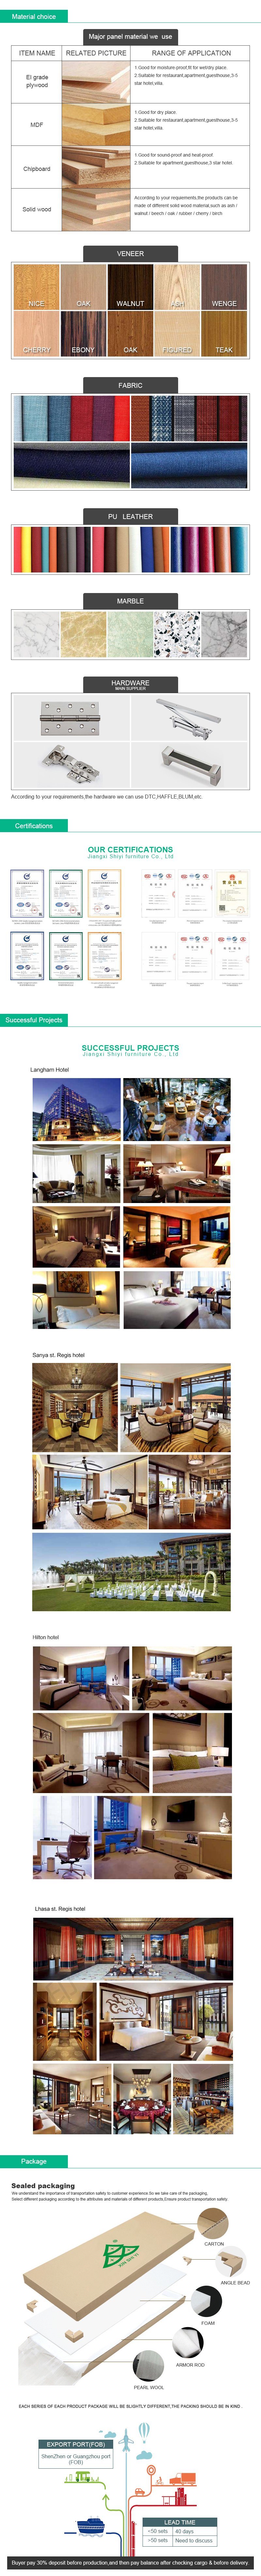 Hotel Furniture Wooden Bed 5 Star Luxury Hotel Furniture